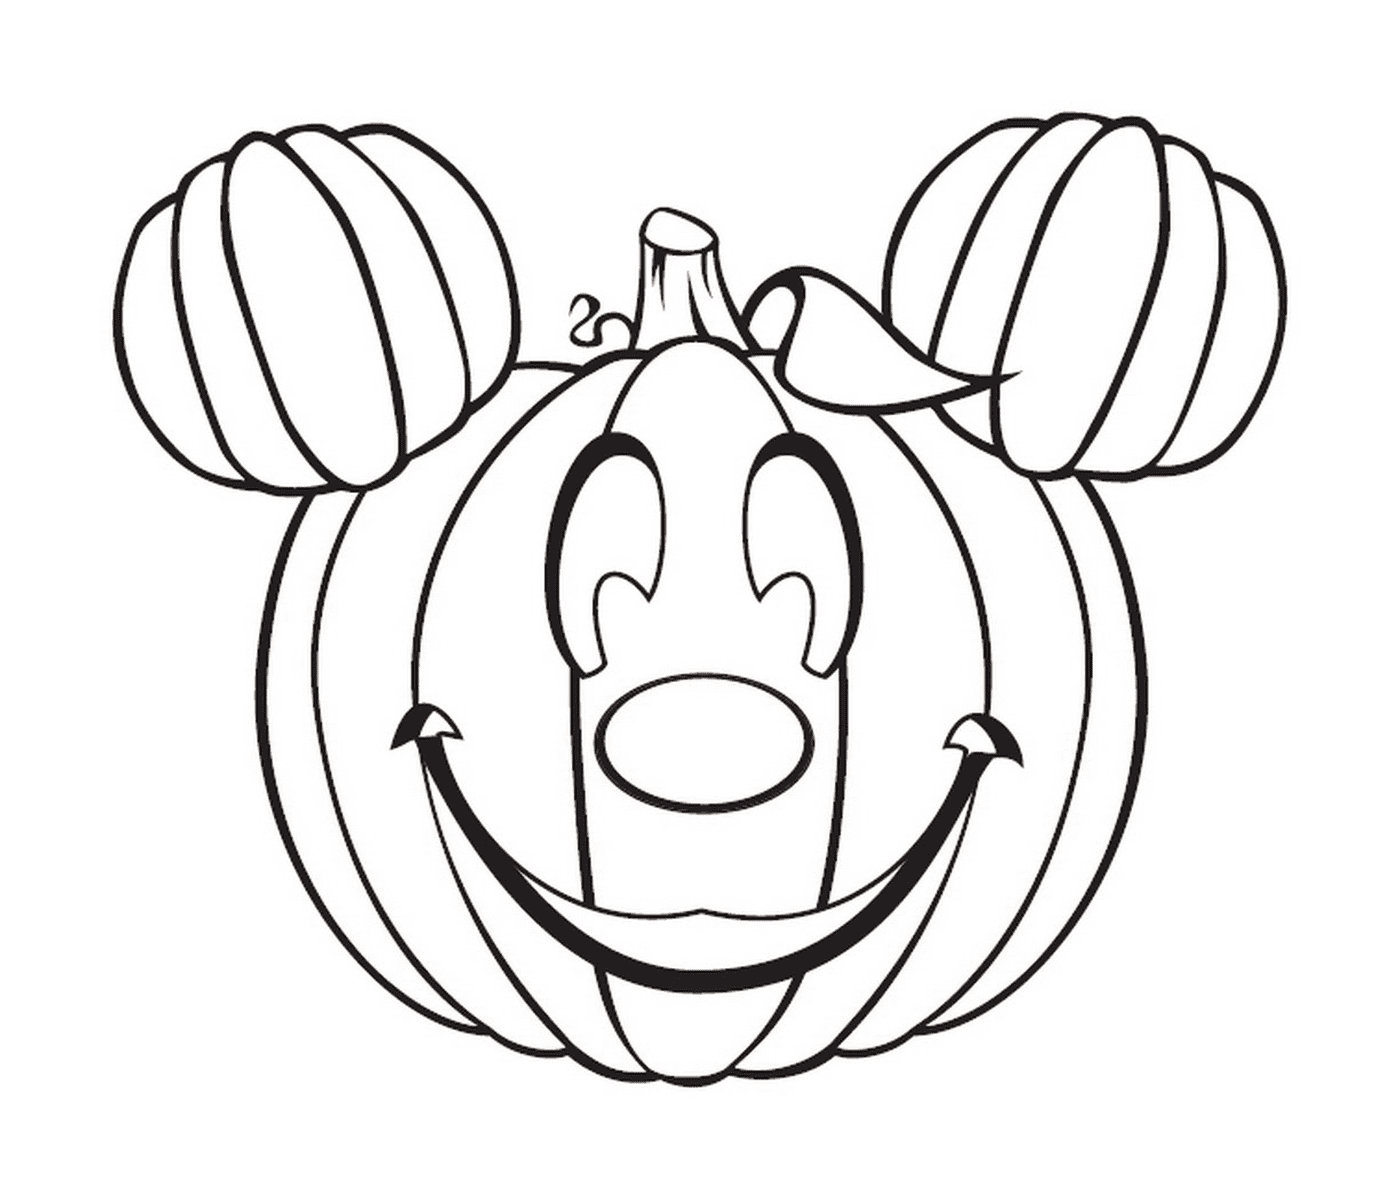  Topolino Zucca Mouse Halloween 